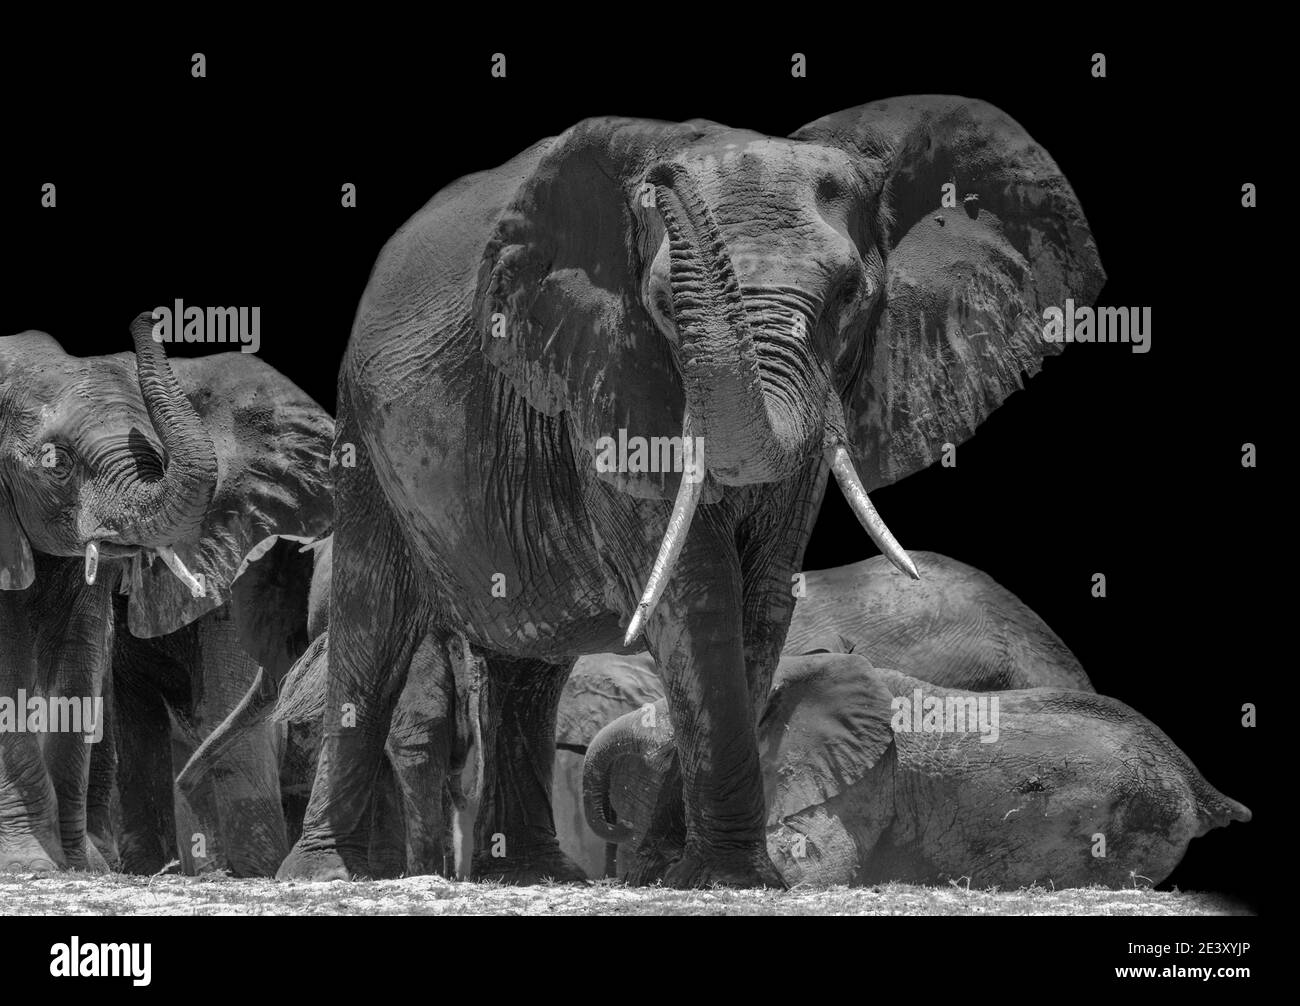 Herd of elephants on the Chobe River in Chobe National Park in black and white, Botswana Stock Photo